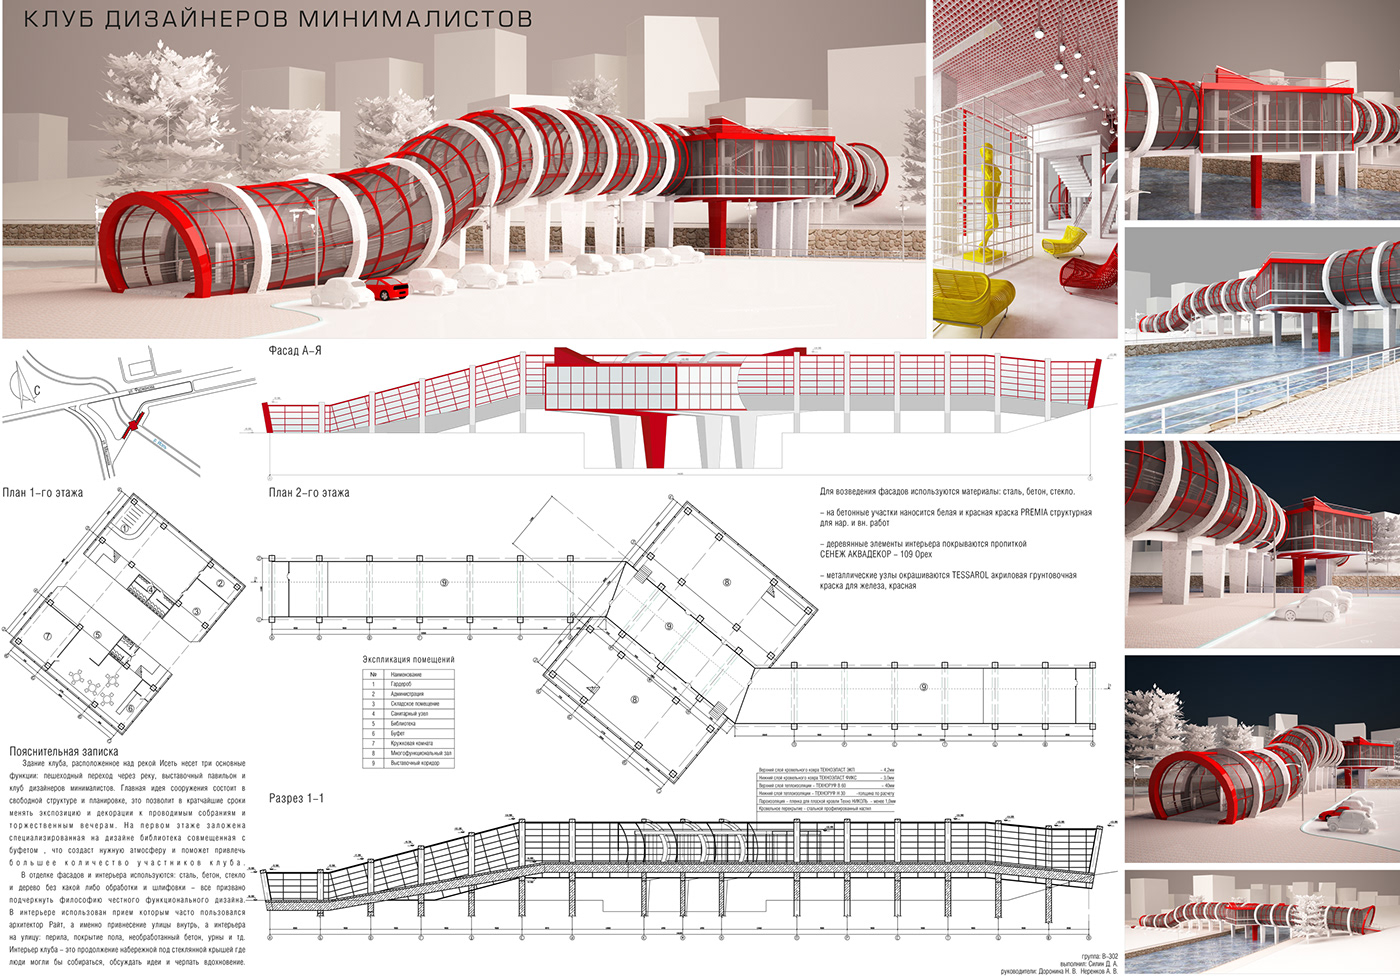 architecture design trening Project usaaa УГАХА silin yekaterinburg Russia